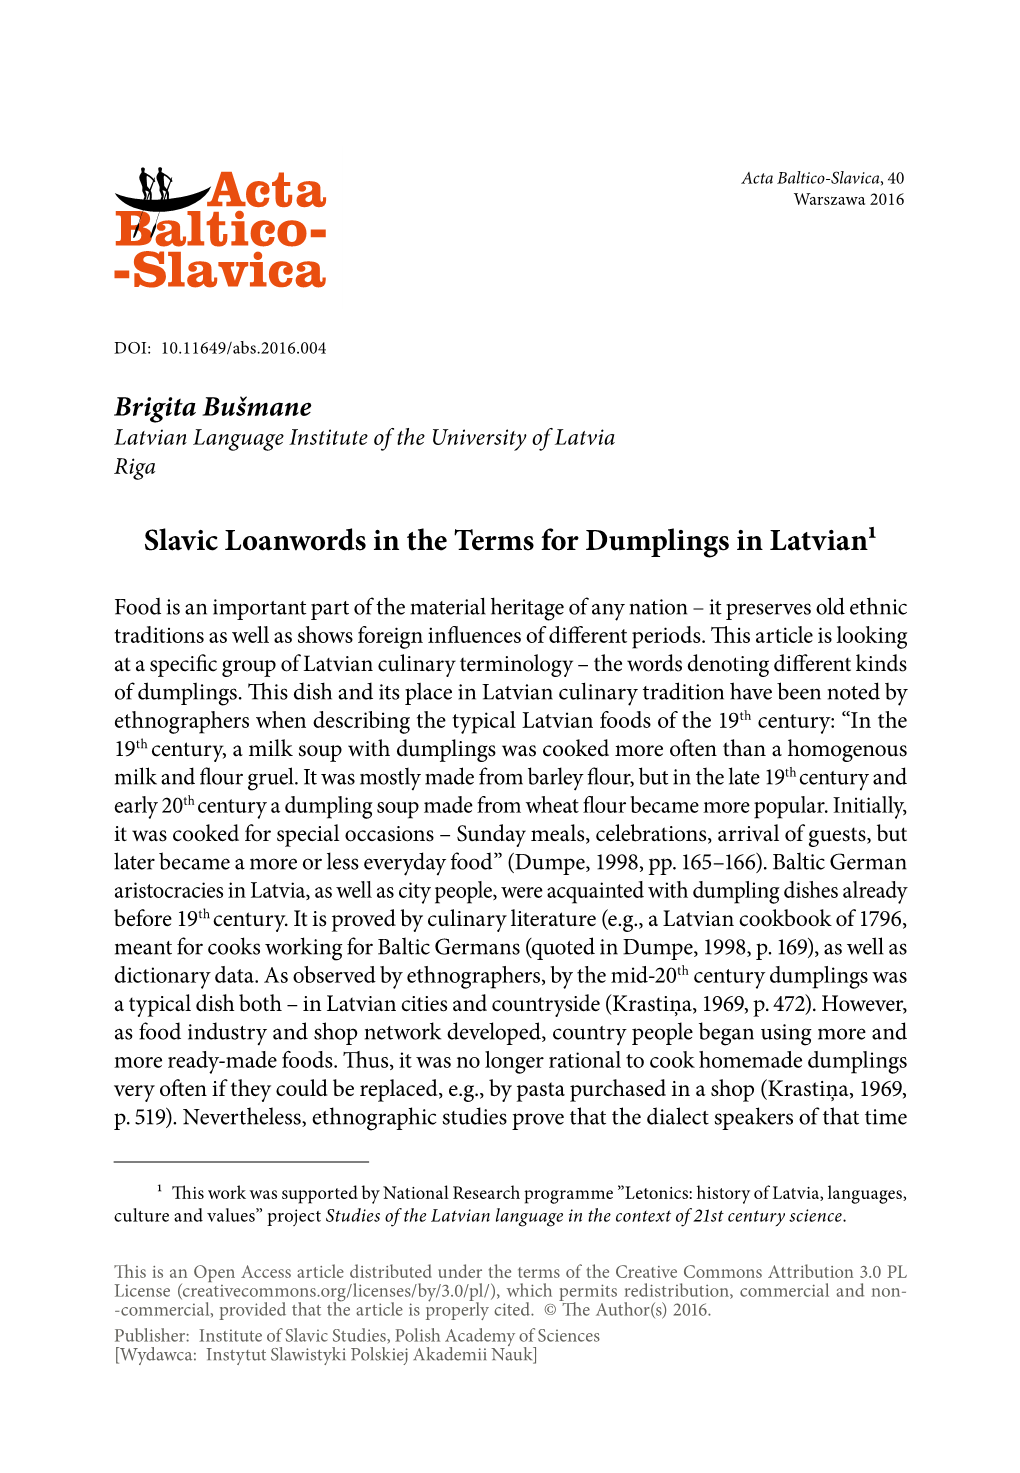 Slavic Loanwords in the Terms for Dumplings in Latvian1